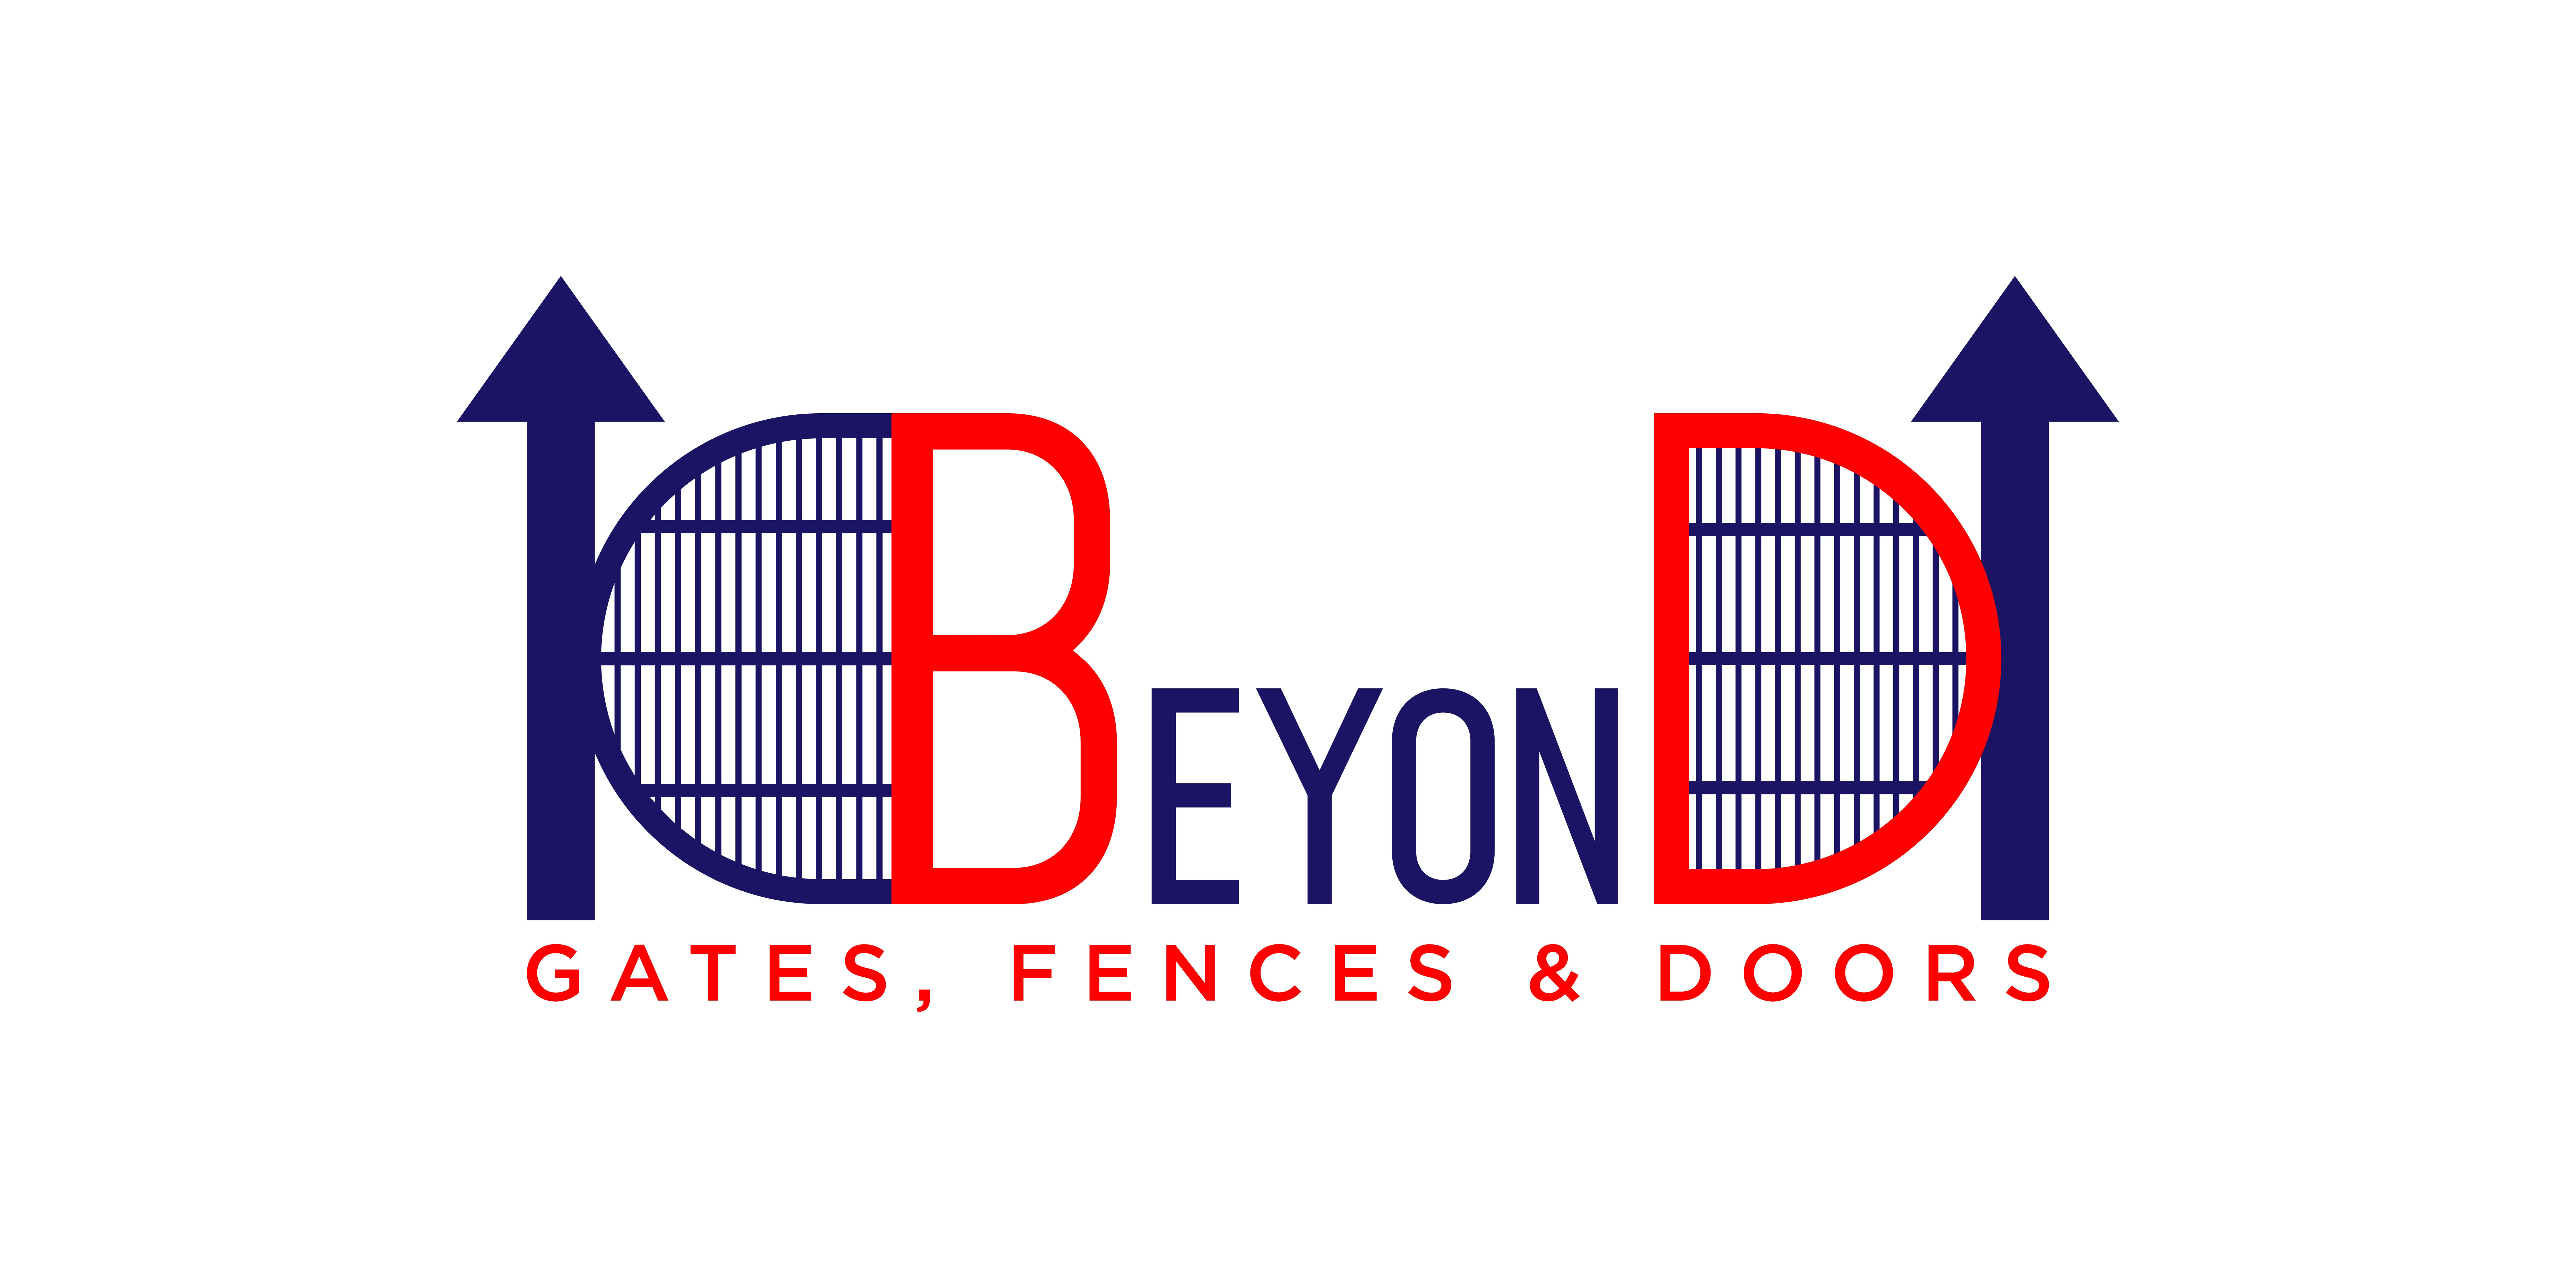 Beyond Gates Fences & Doors  Logo